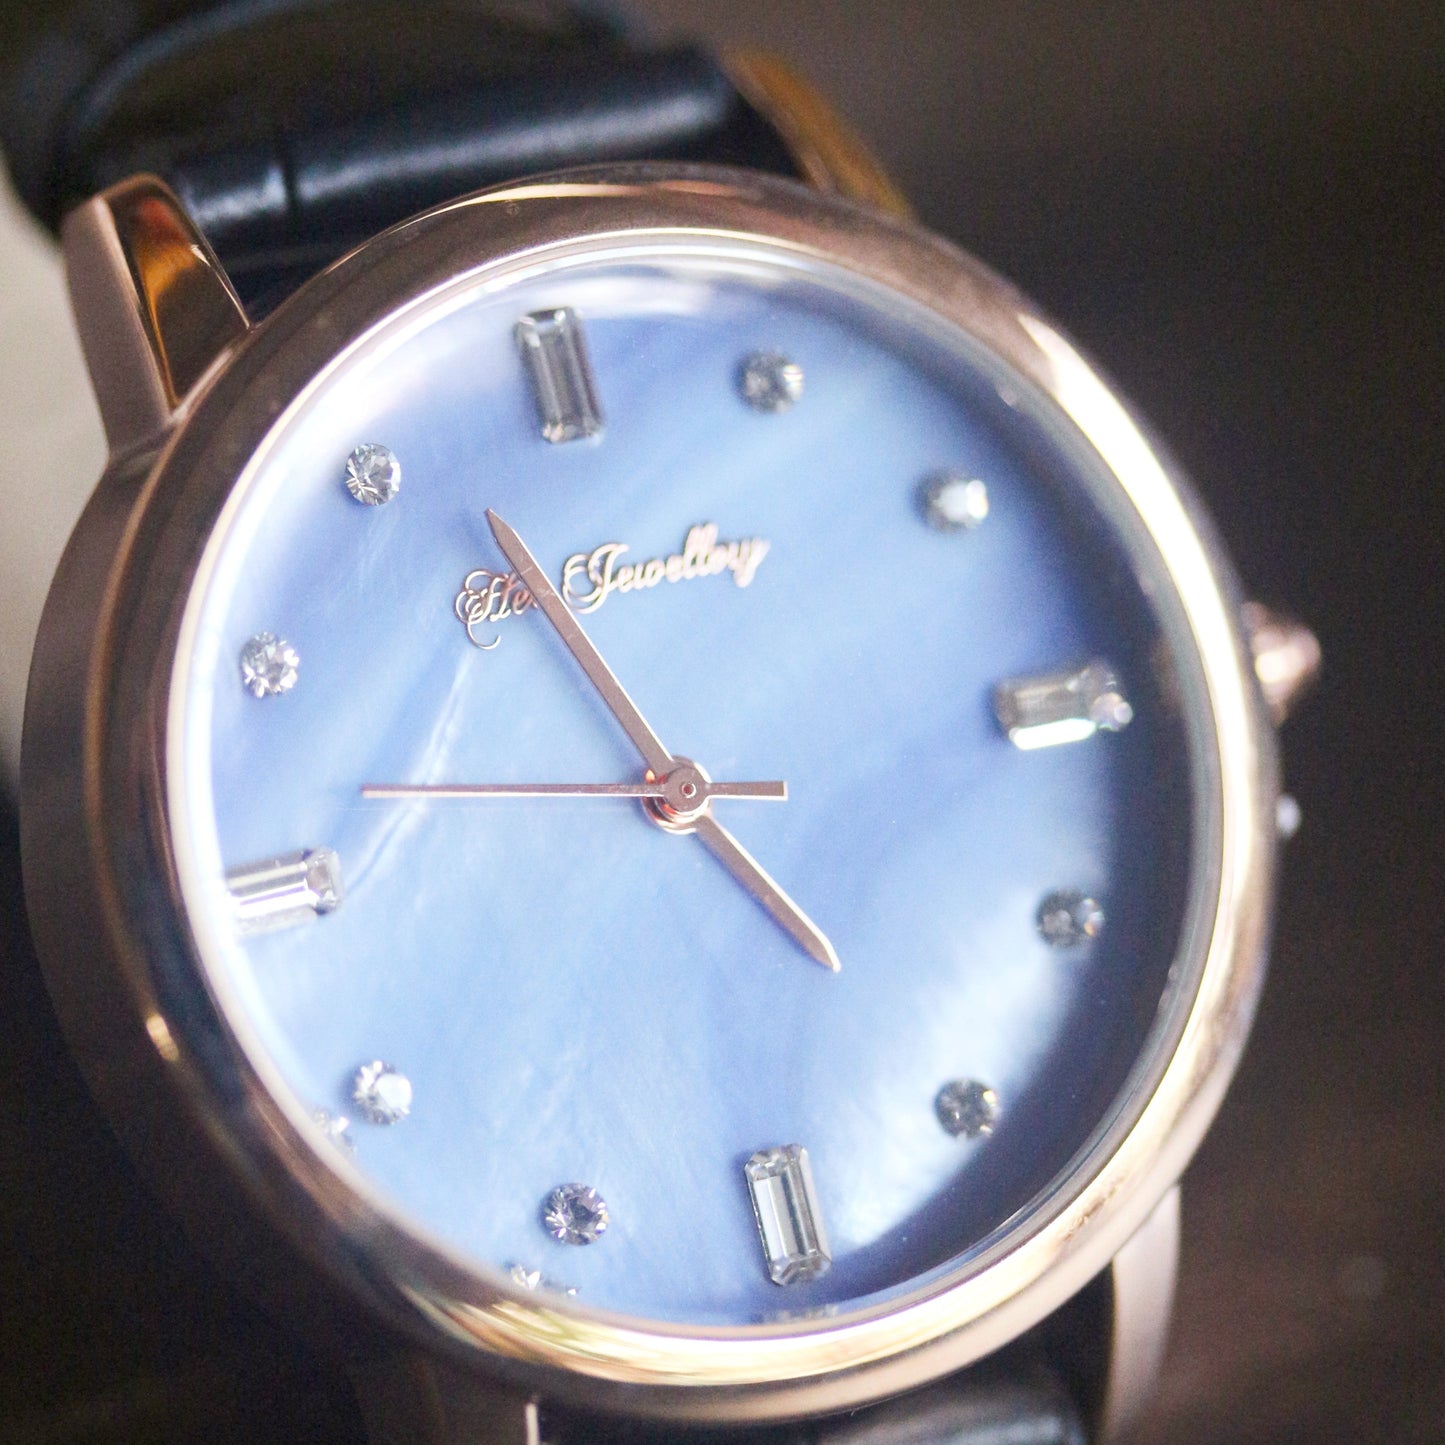 Alanzo Crystal Watch